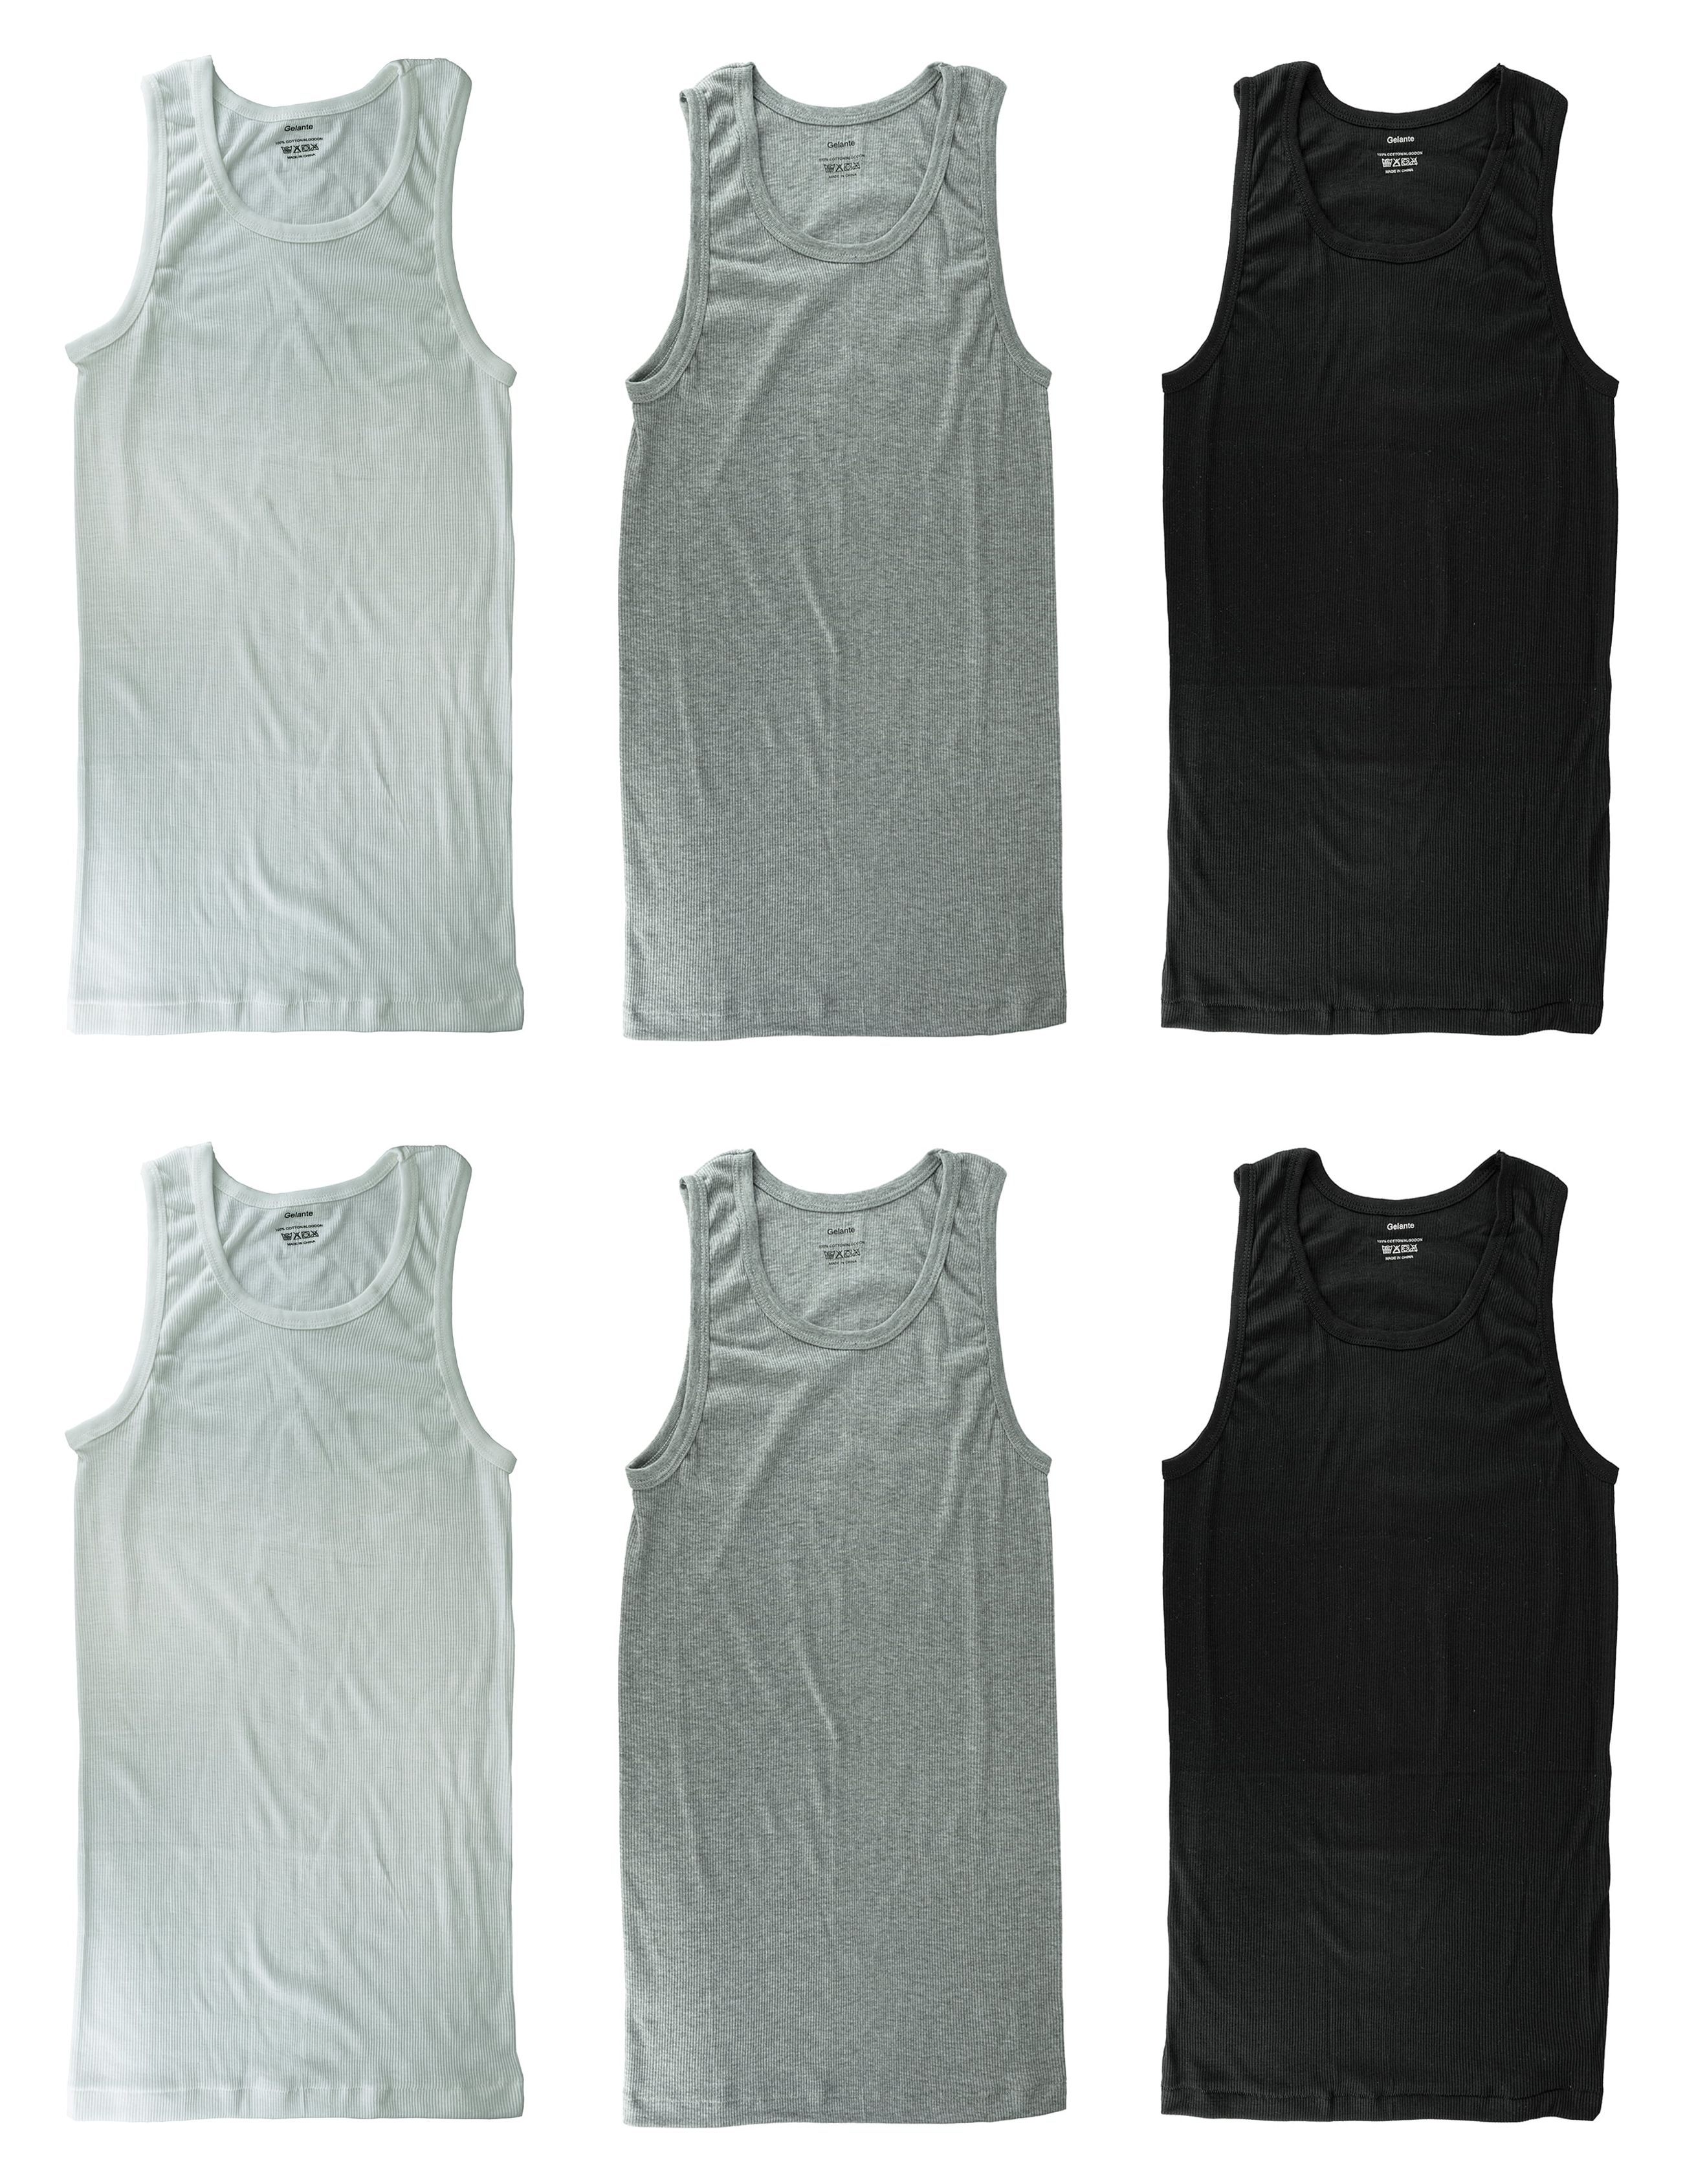 Gelante 6-Pack Cotton Adult Men's Basic Undershirt Tank Top Athletic Sleeveless Tee - image 1 of 5